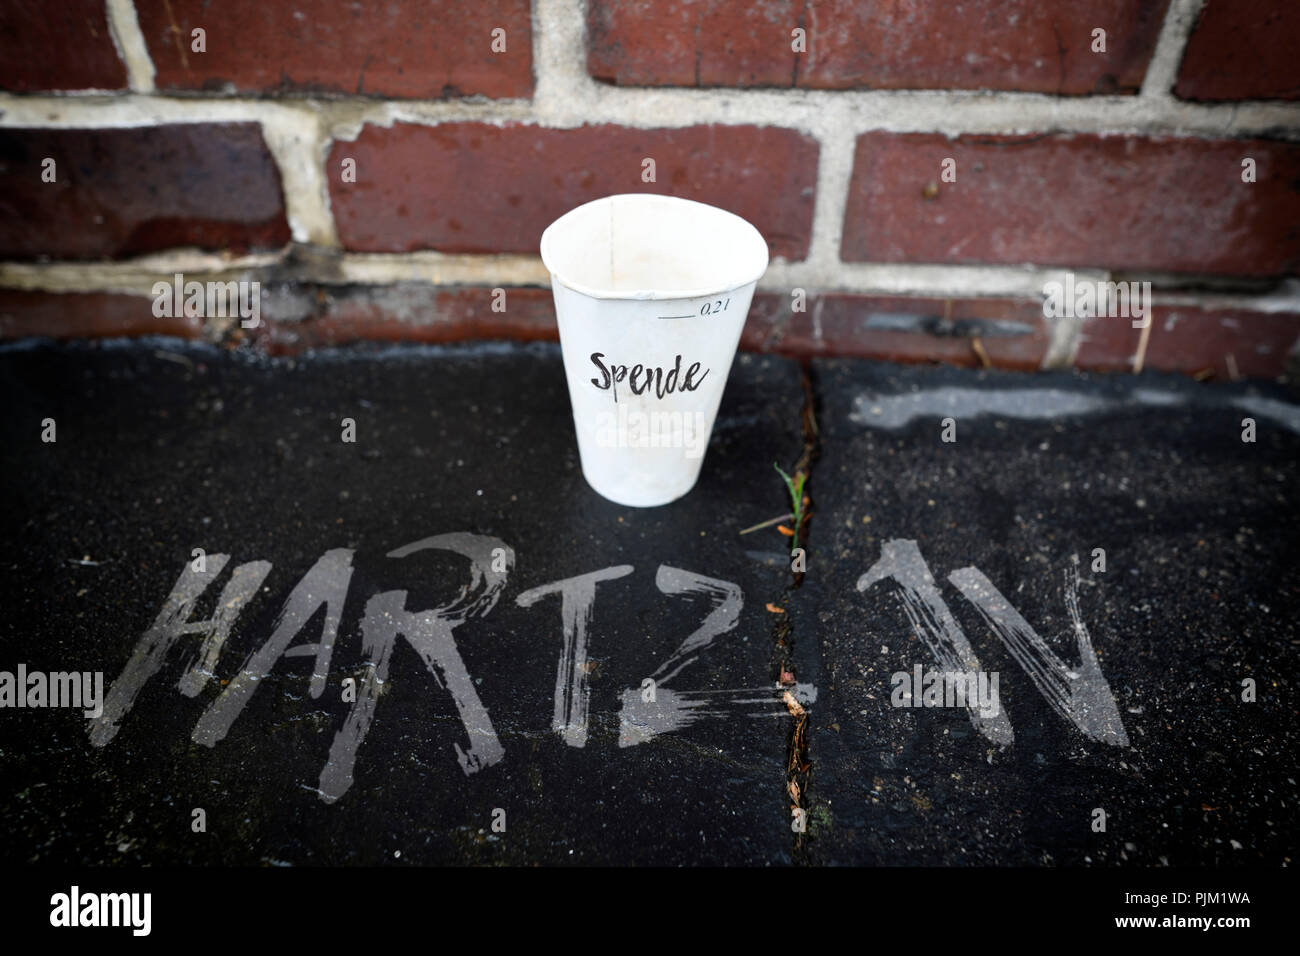 Donation cup, Hartz IV Stock Photo